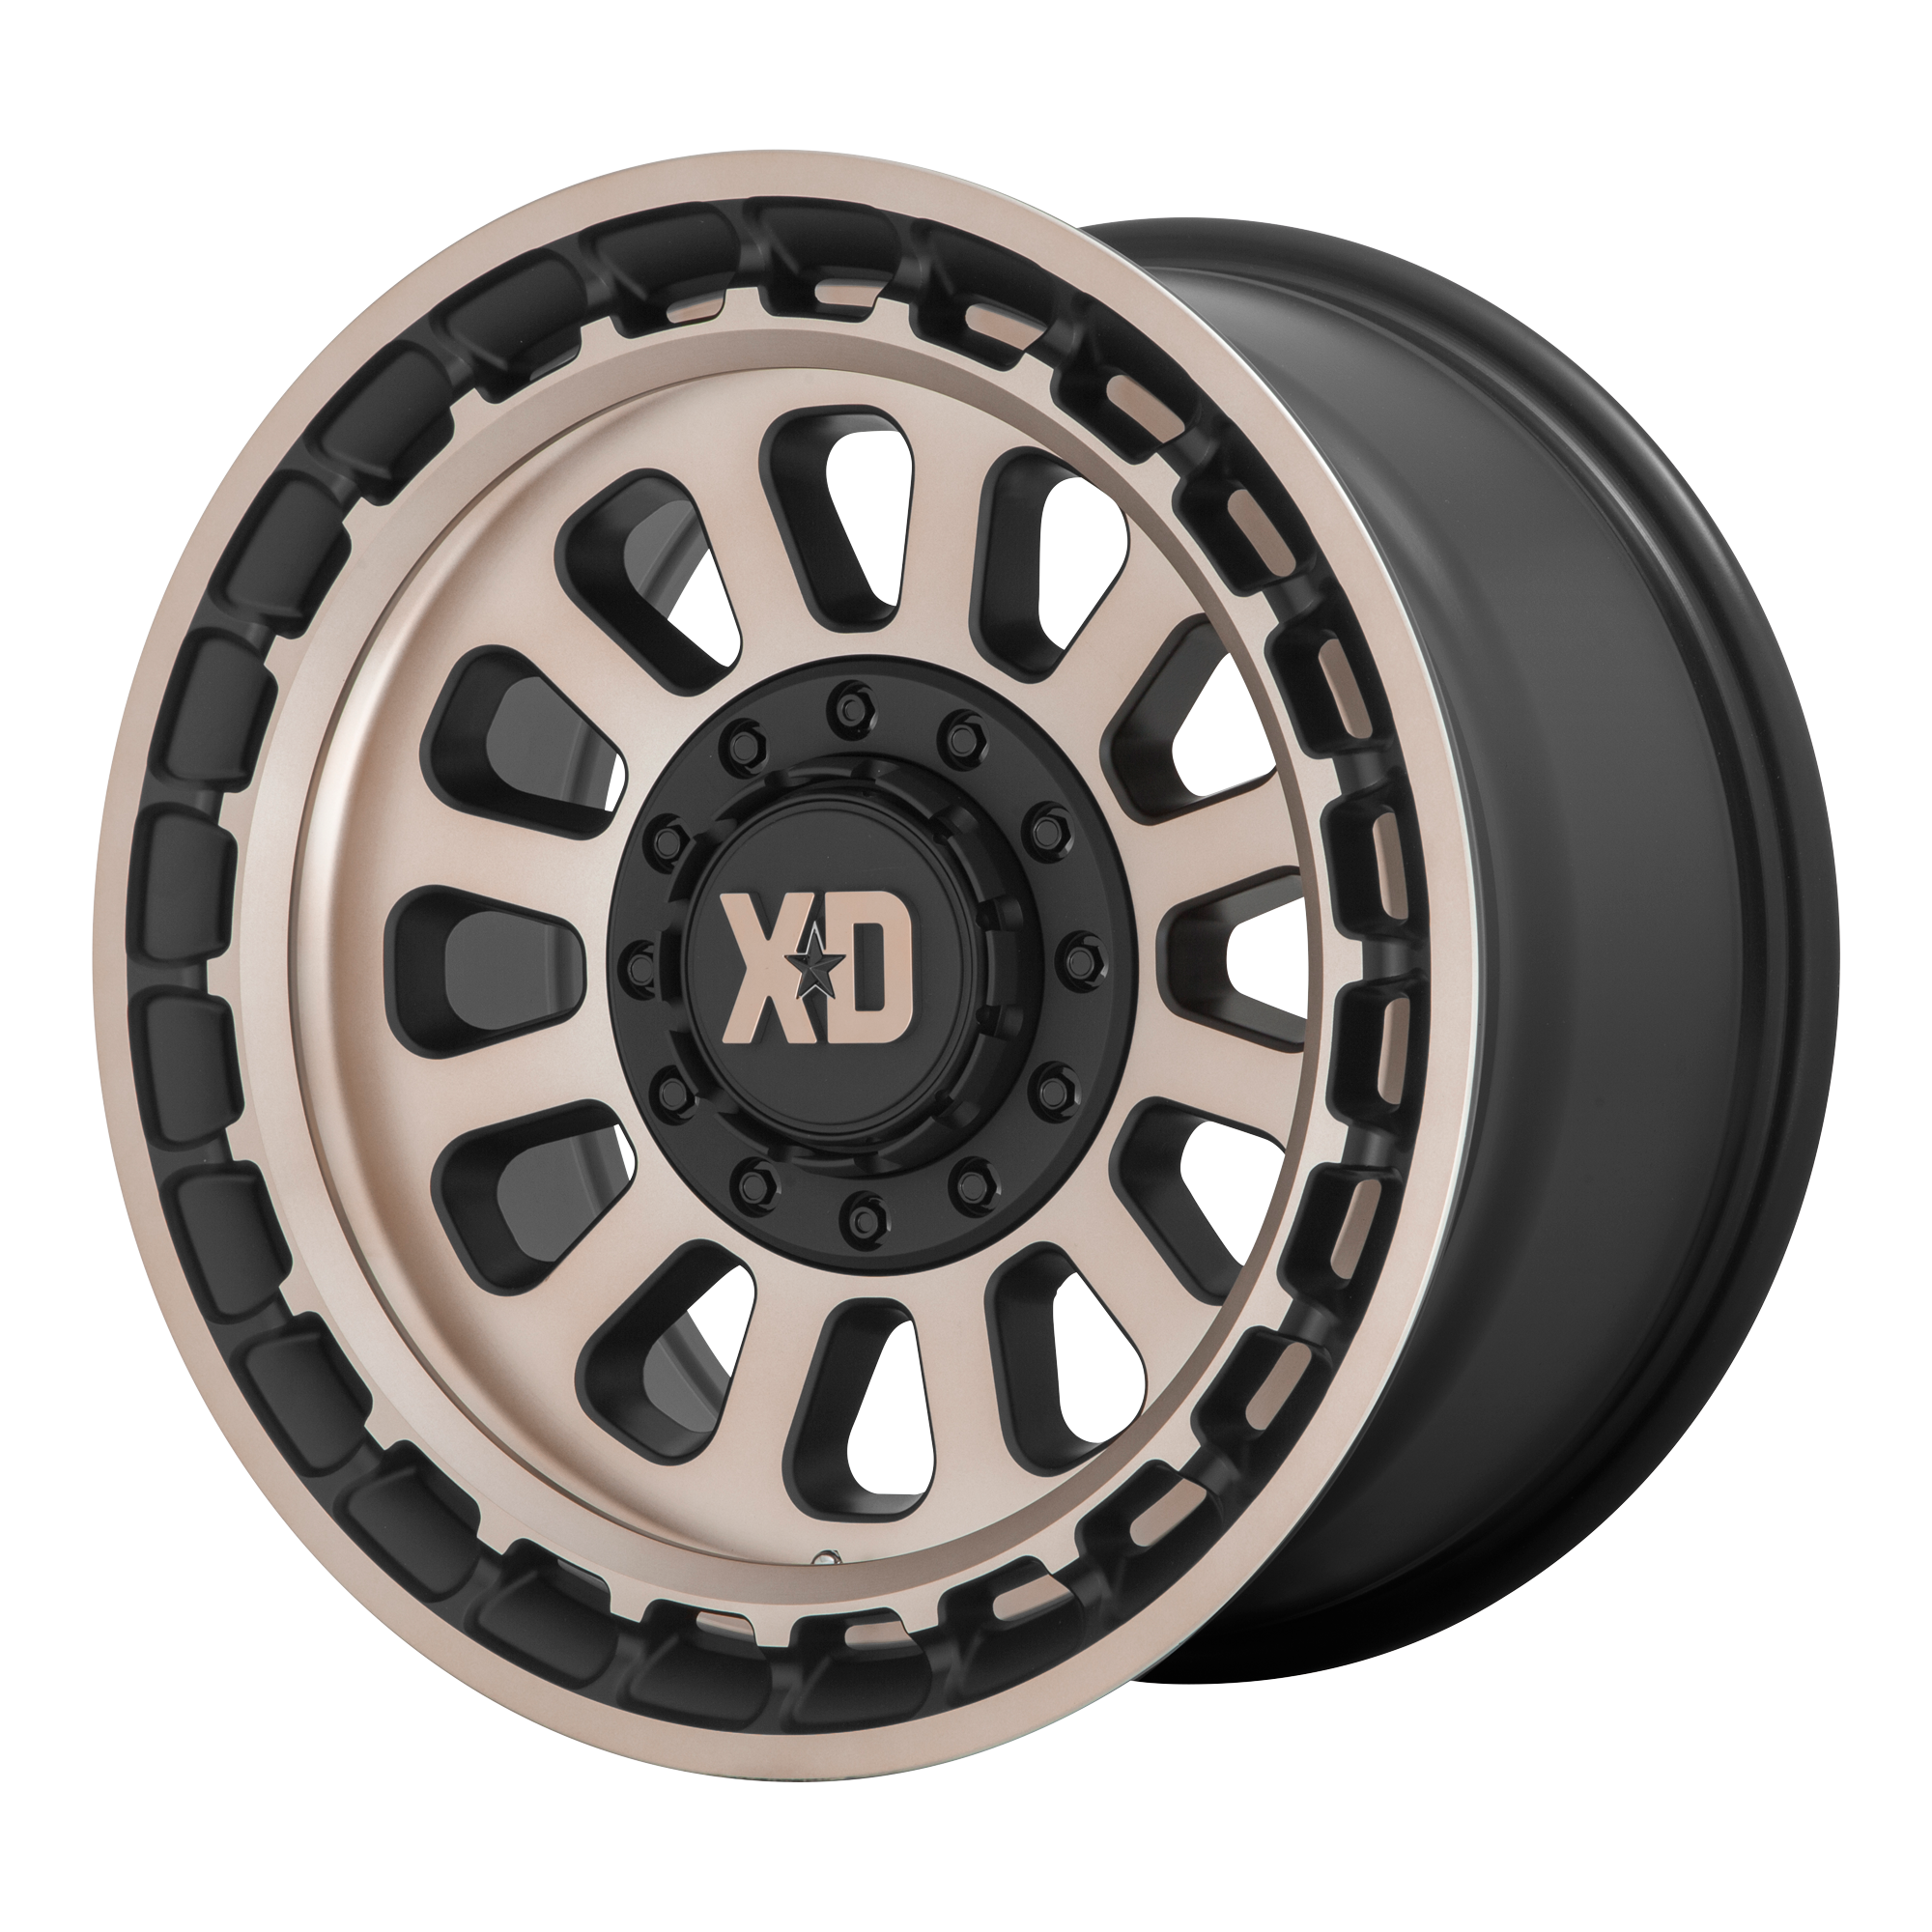 XD 17"x9" Non-Chrome Satin Black With Bronze Tint Custom Wheel ARSWCWXD85679035600